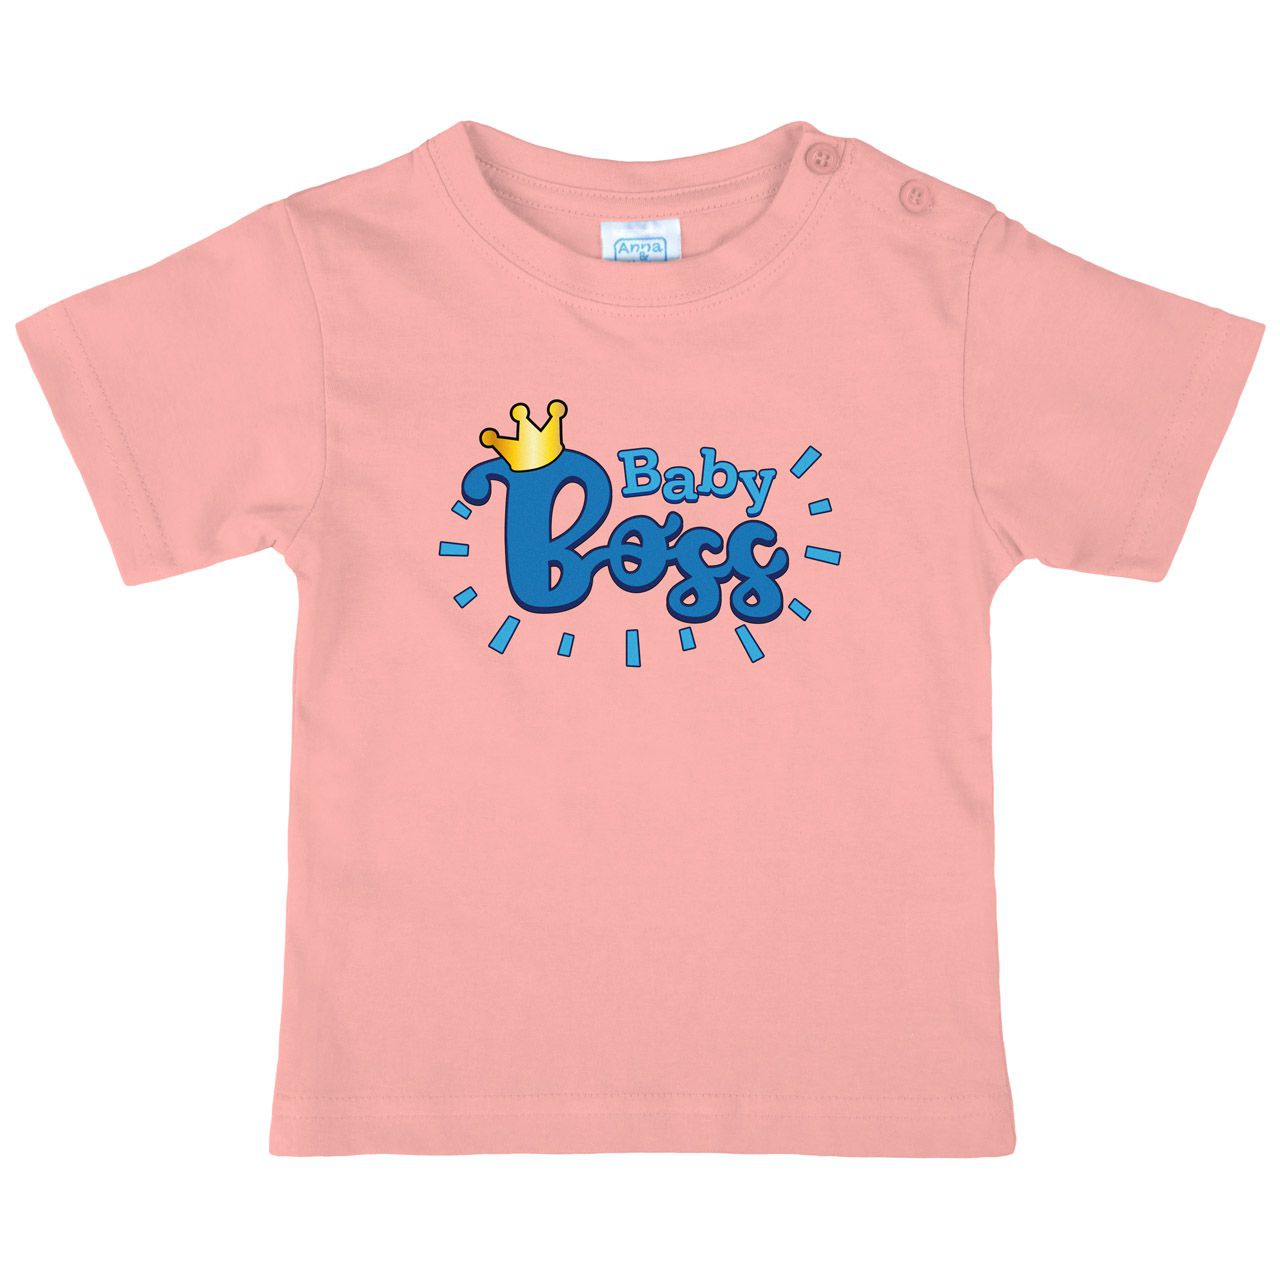 Baby Boss Blau Kinder T-Shirt rosa 56 / 62